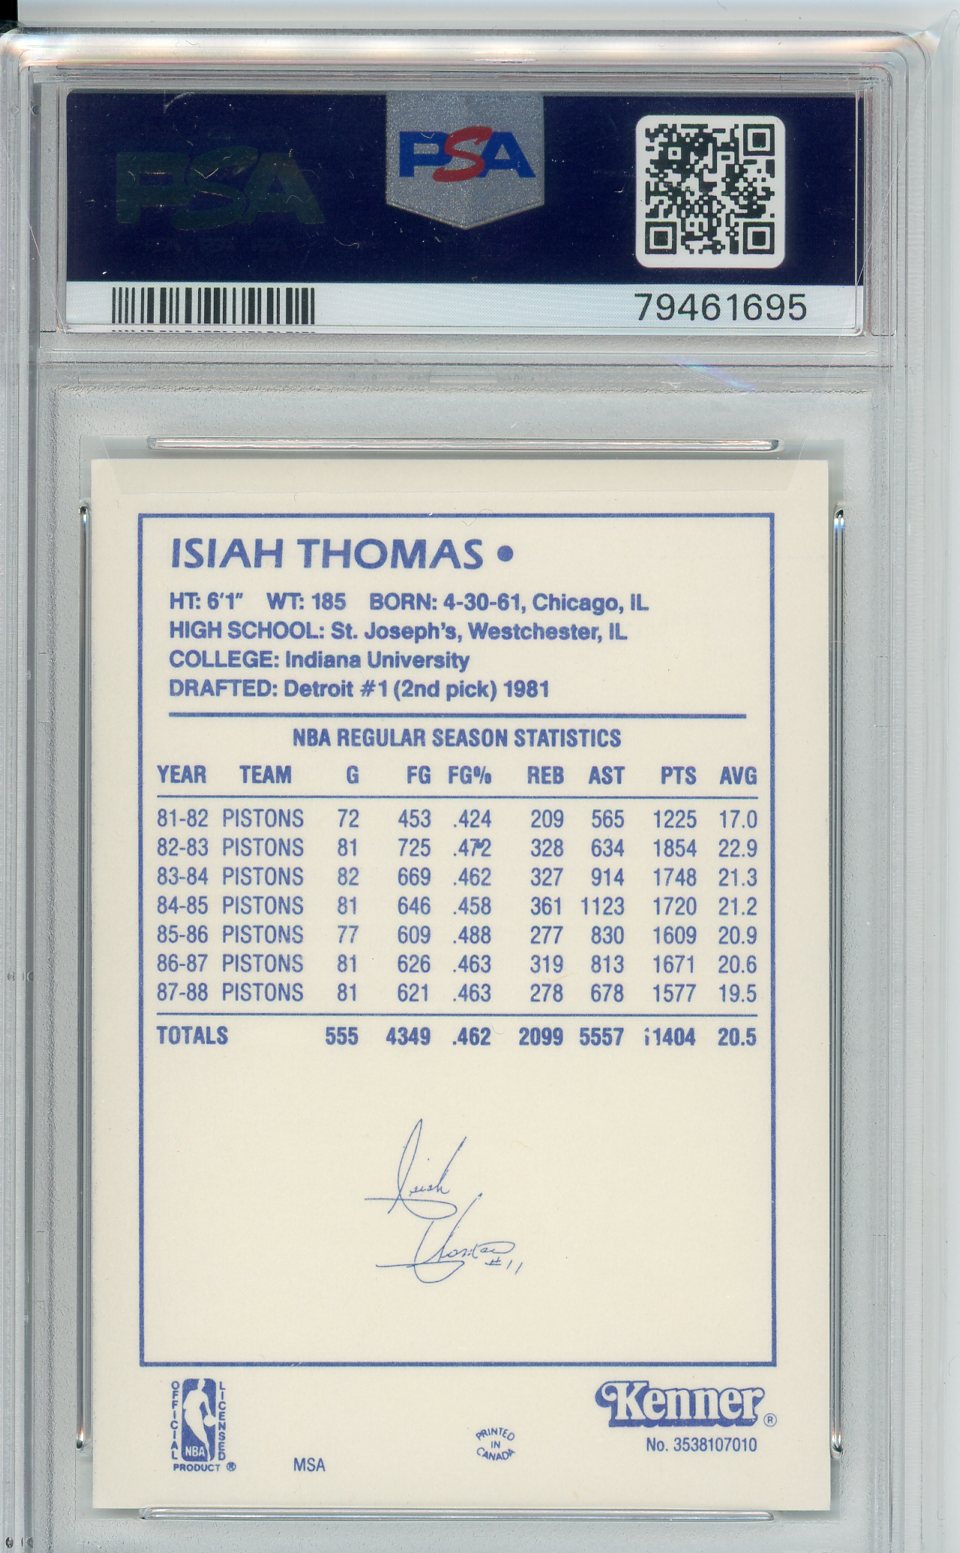 1988 Kenner Isiah Thomas Starting Lineup Graded Card PSA 7